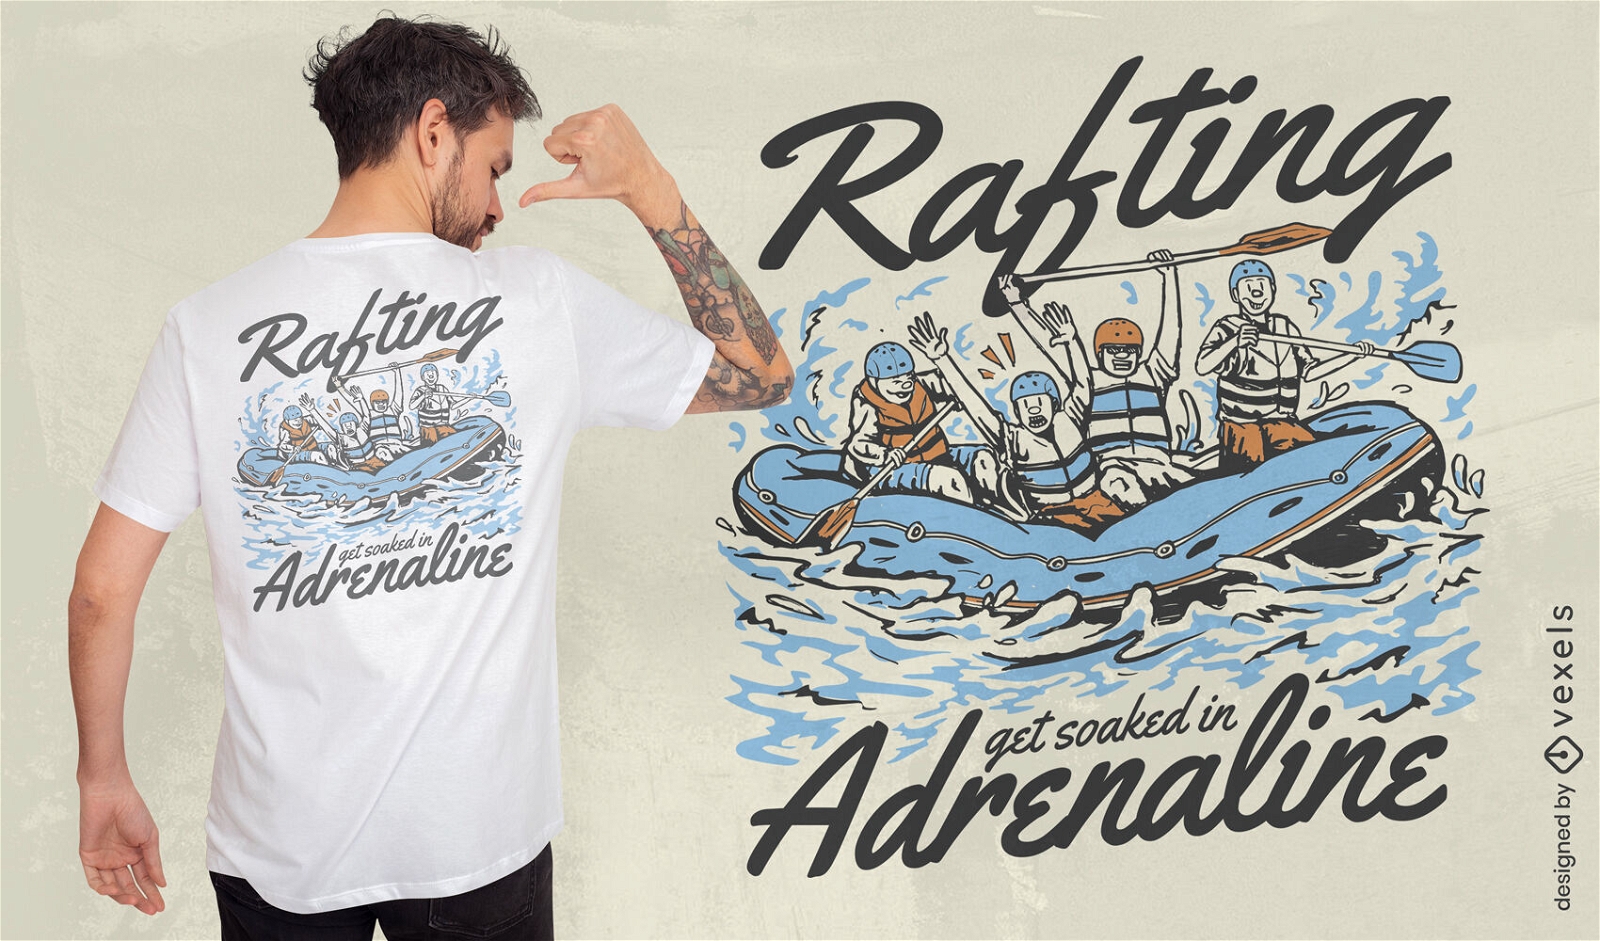 Rafting adrenaline t-shirt design